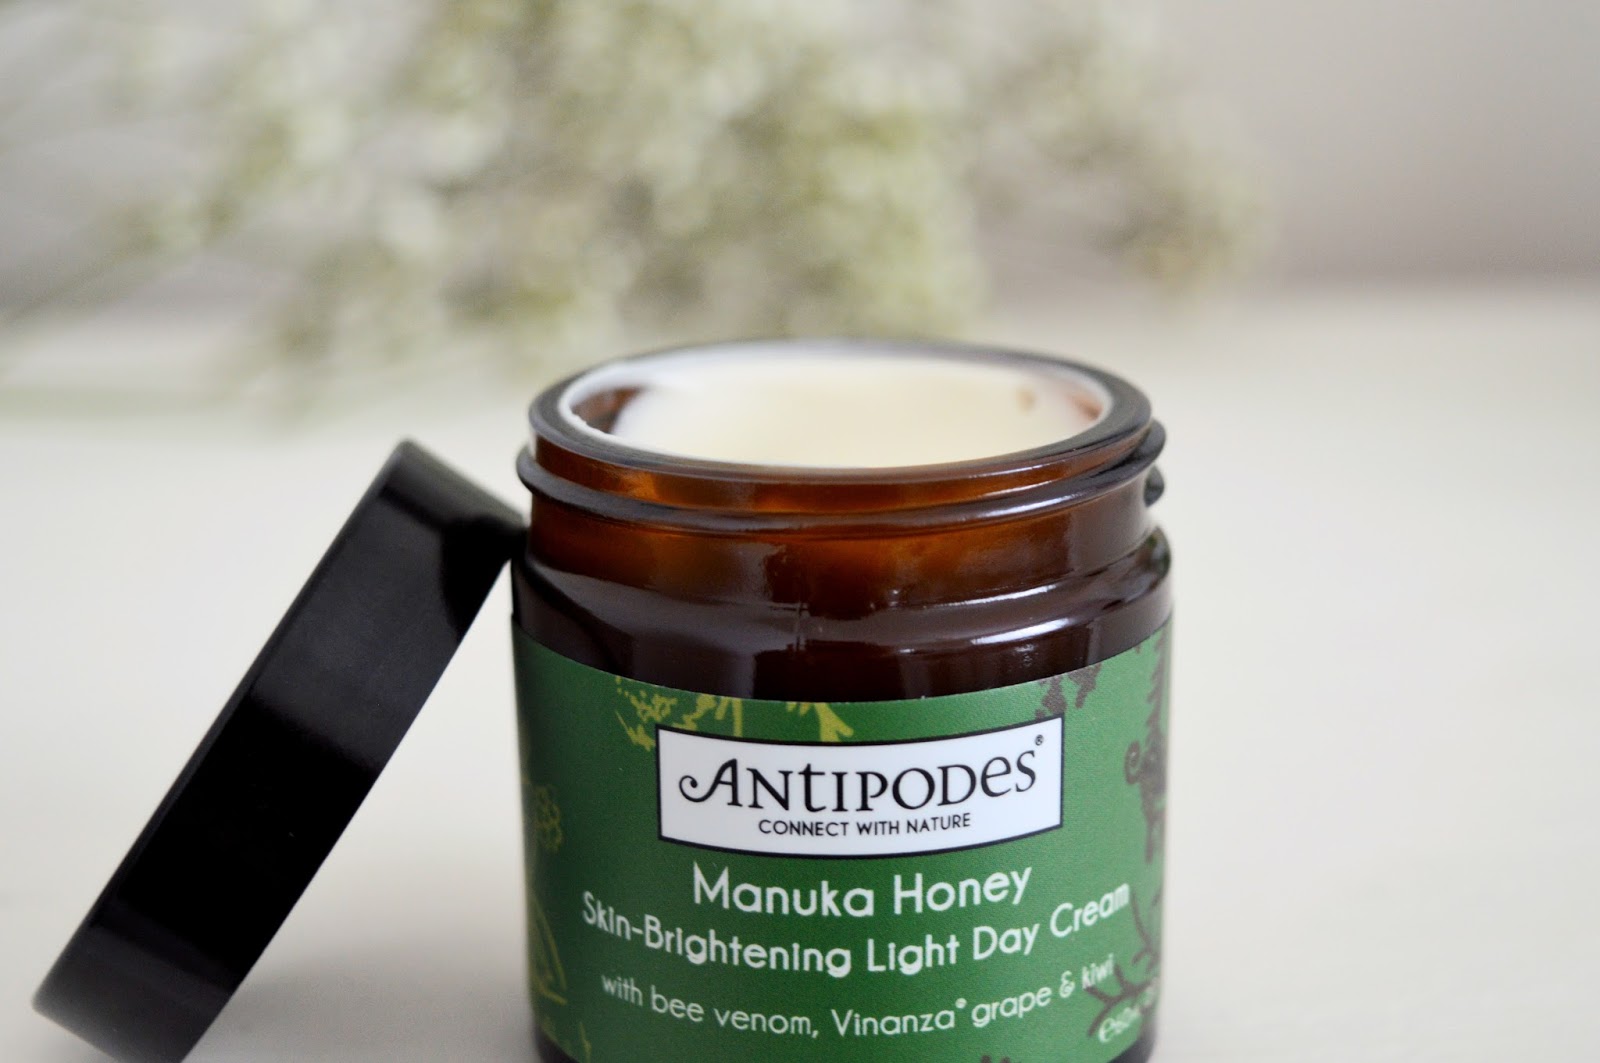 Antipodes Manuka Honey Skin Brightening Day Cream review, UK beauty blog